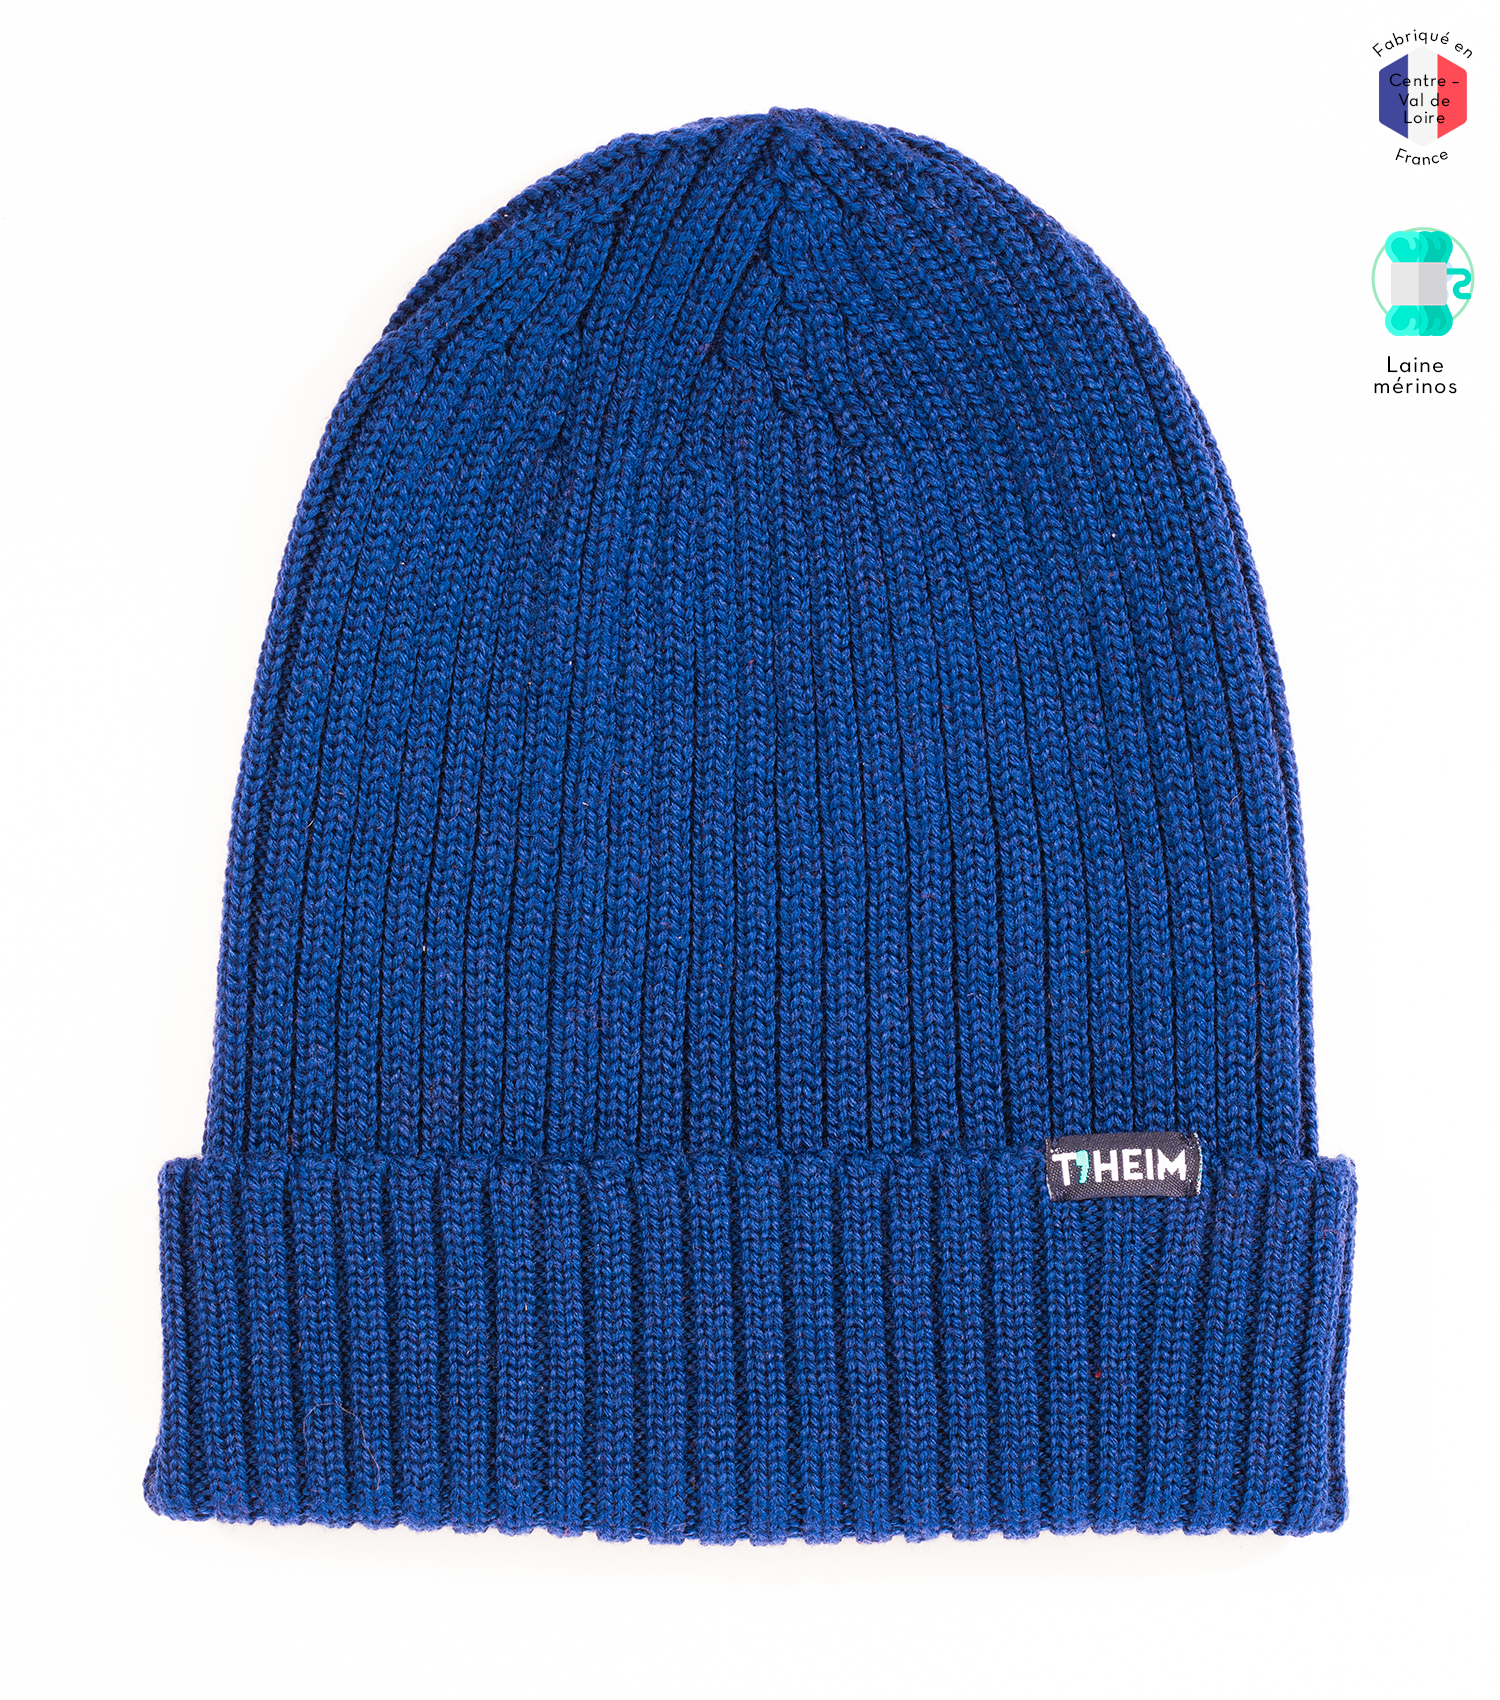 theim-bonnet-laine-merinos-made-in-france-bleu-marine-1500x1700px